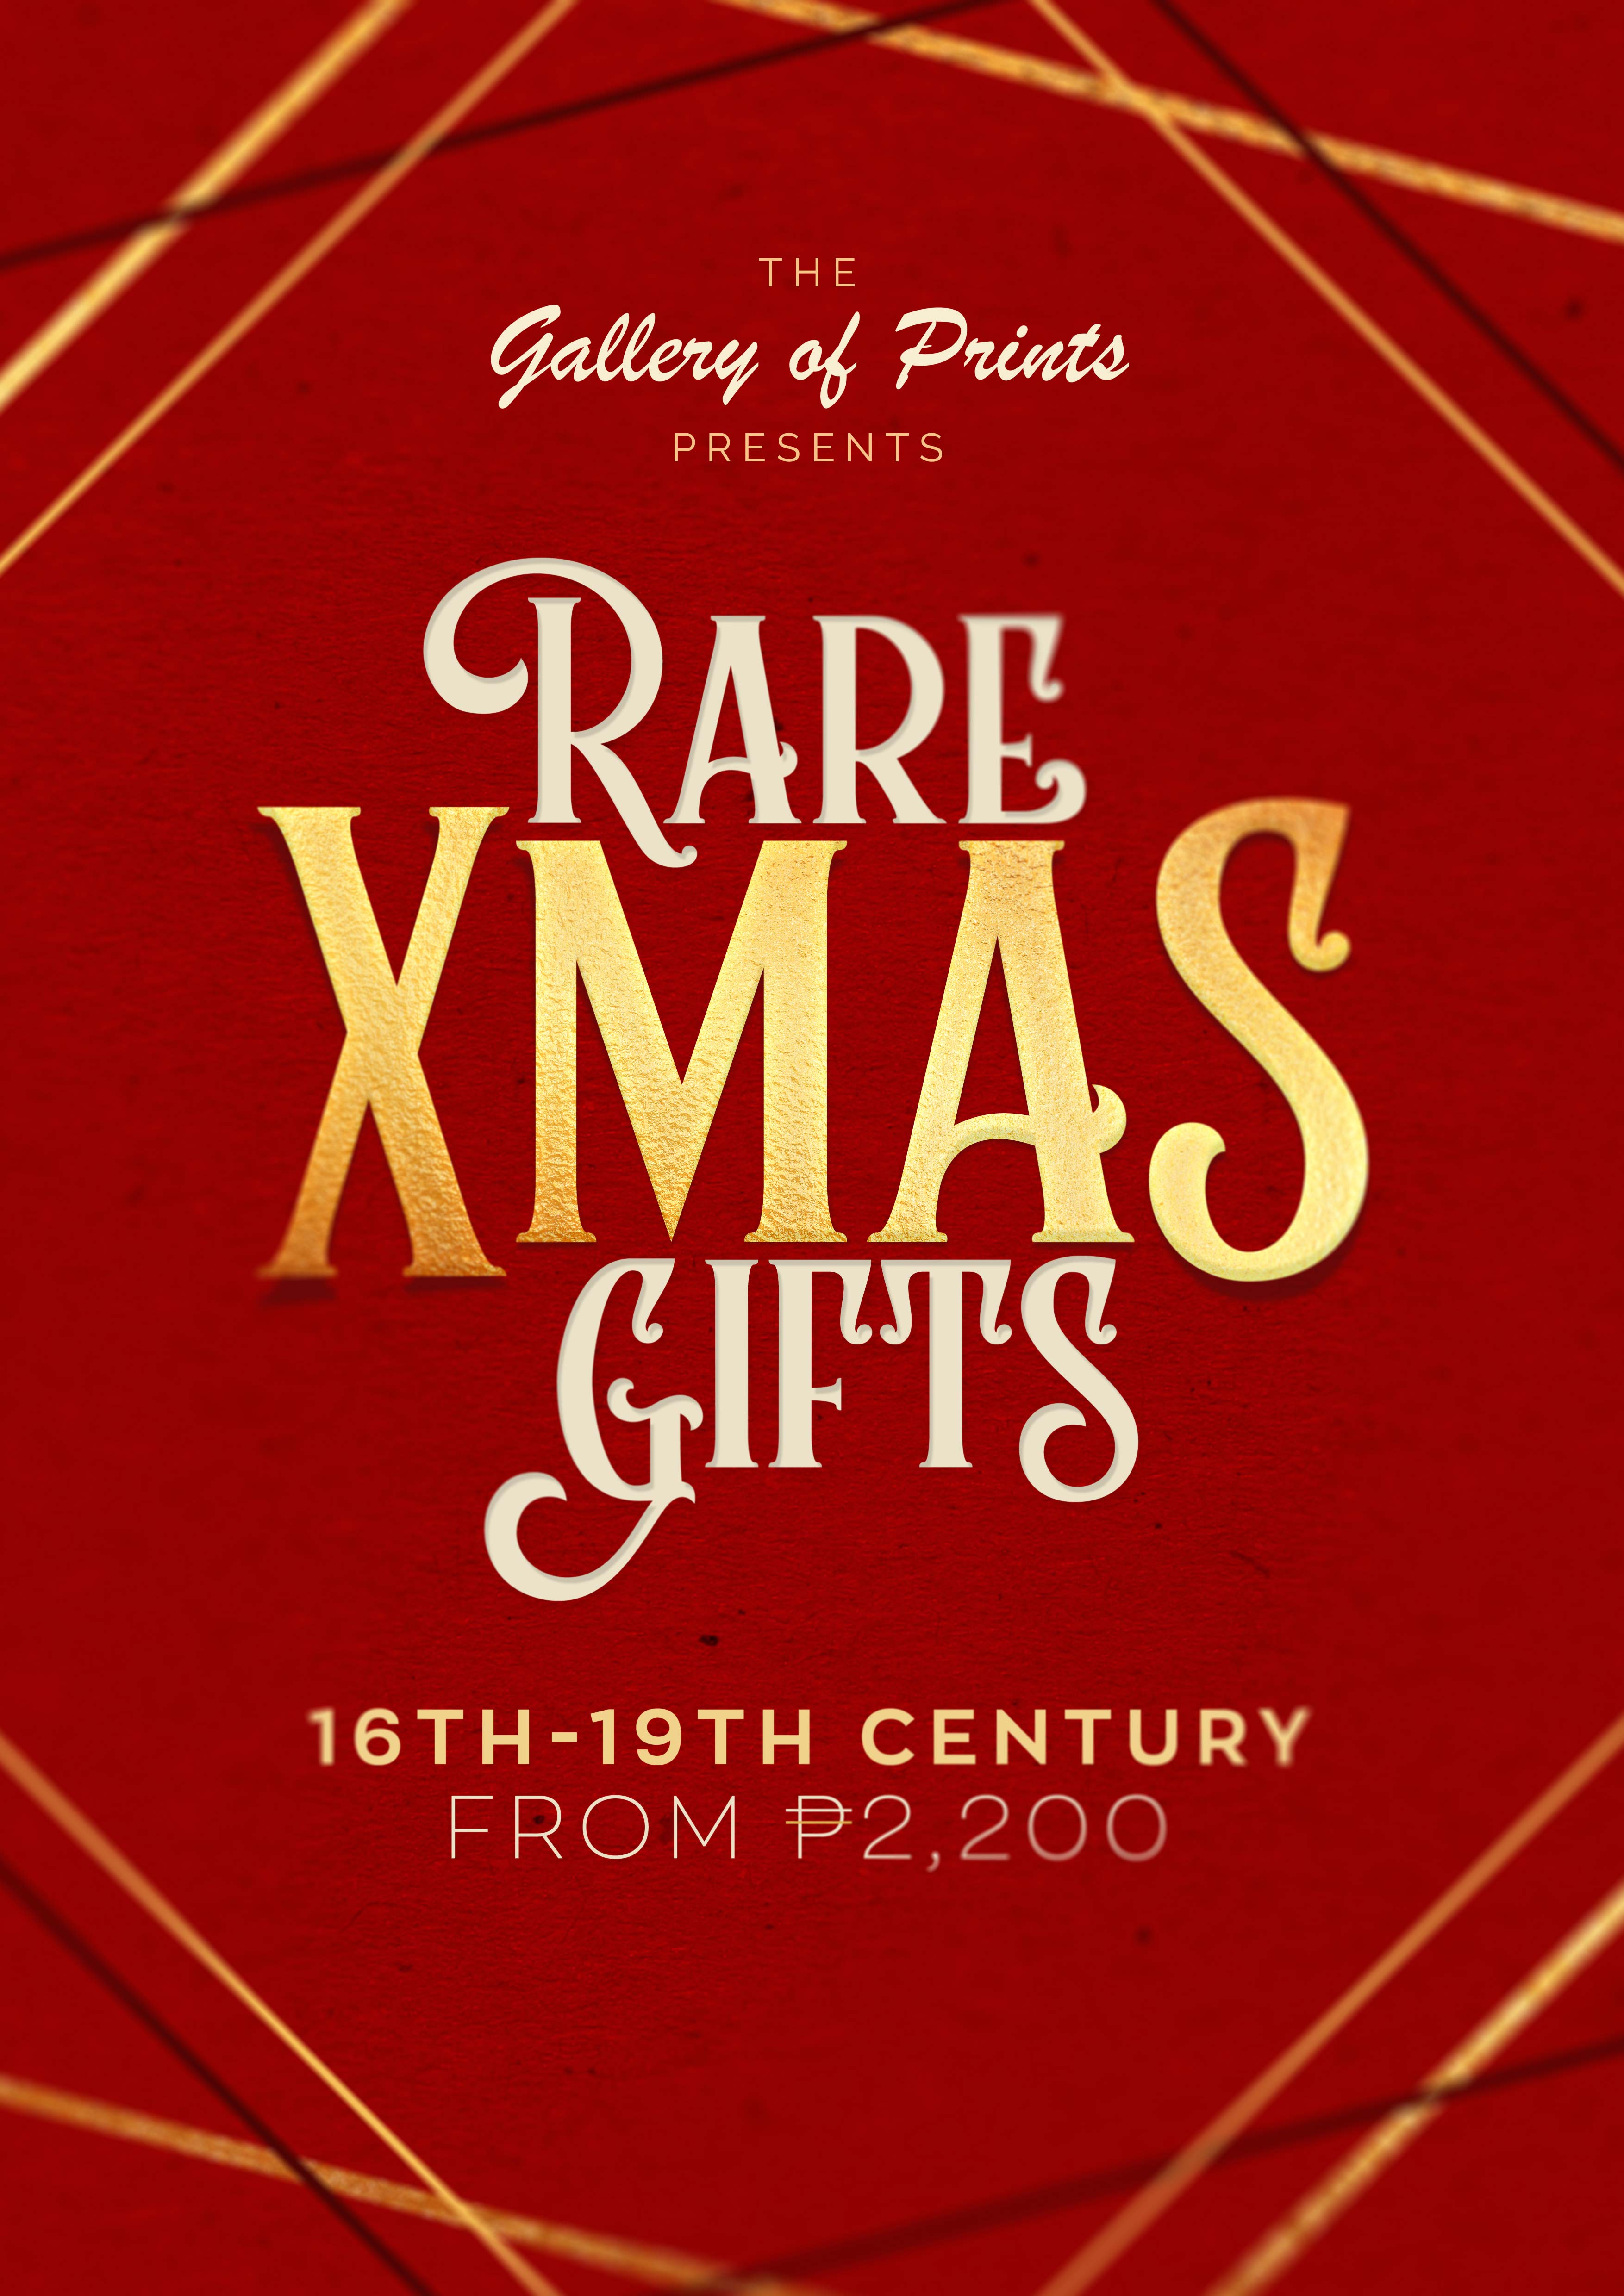 Rare XMAS Gifts, 16th - 19th Century